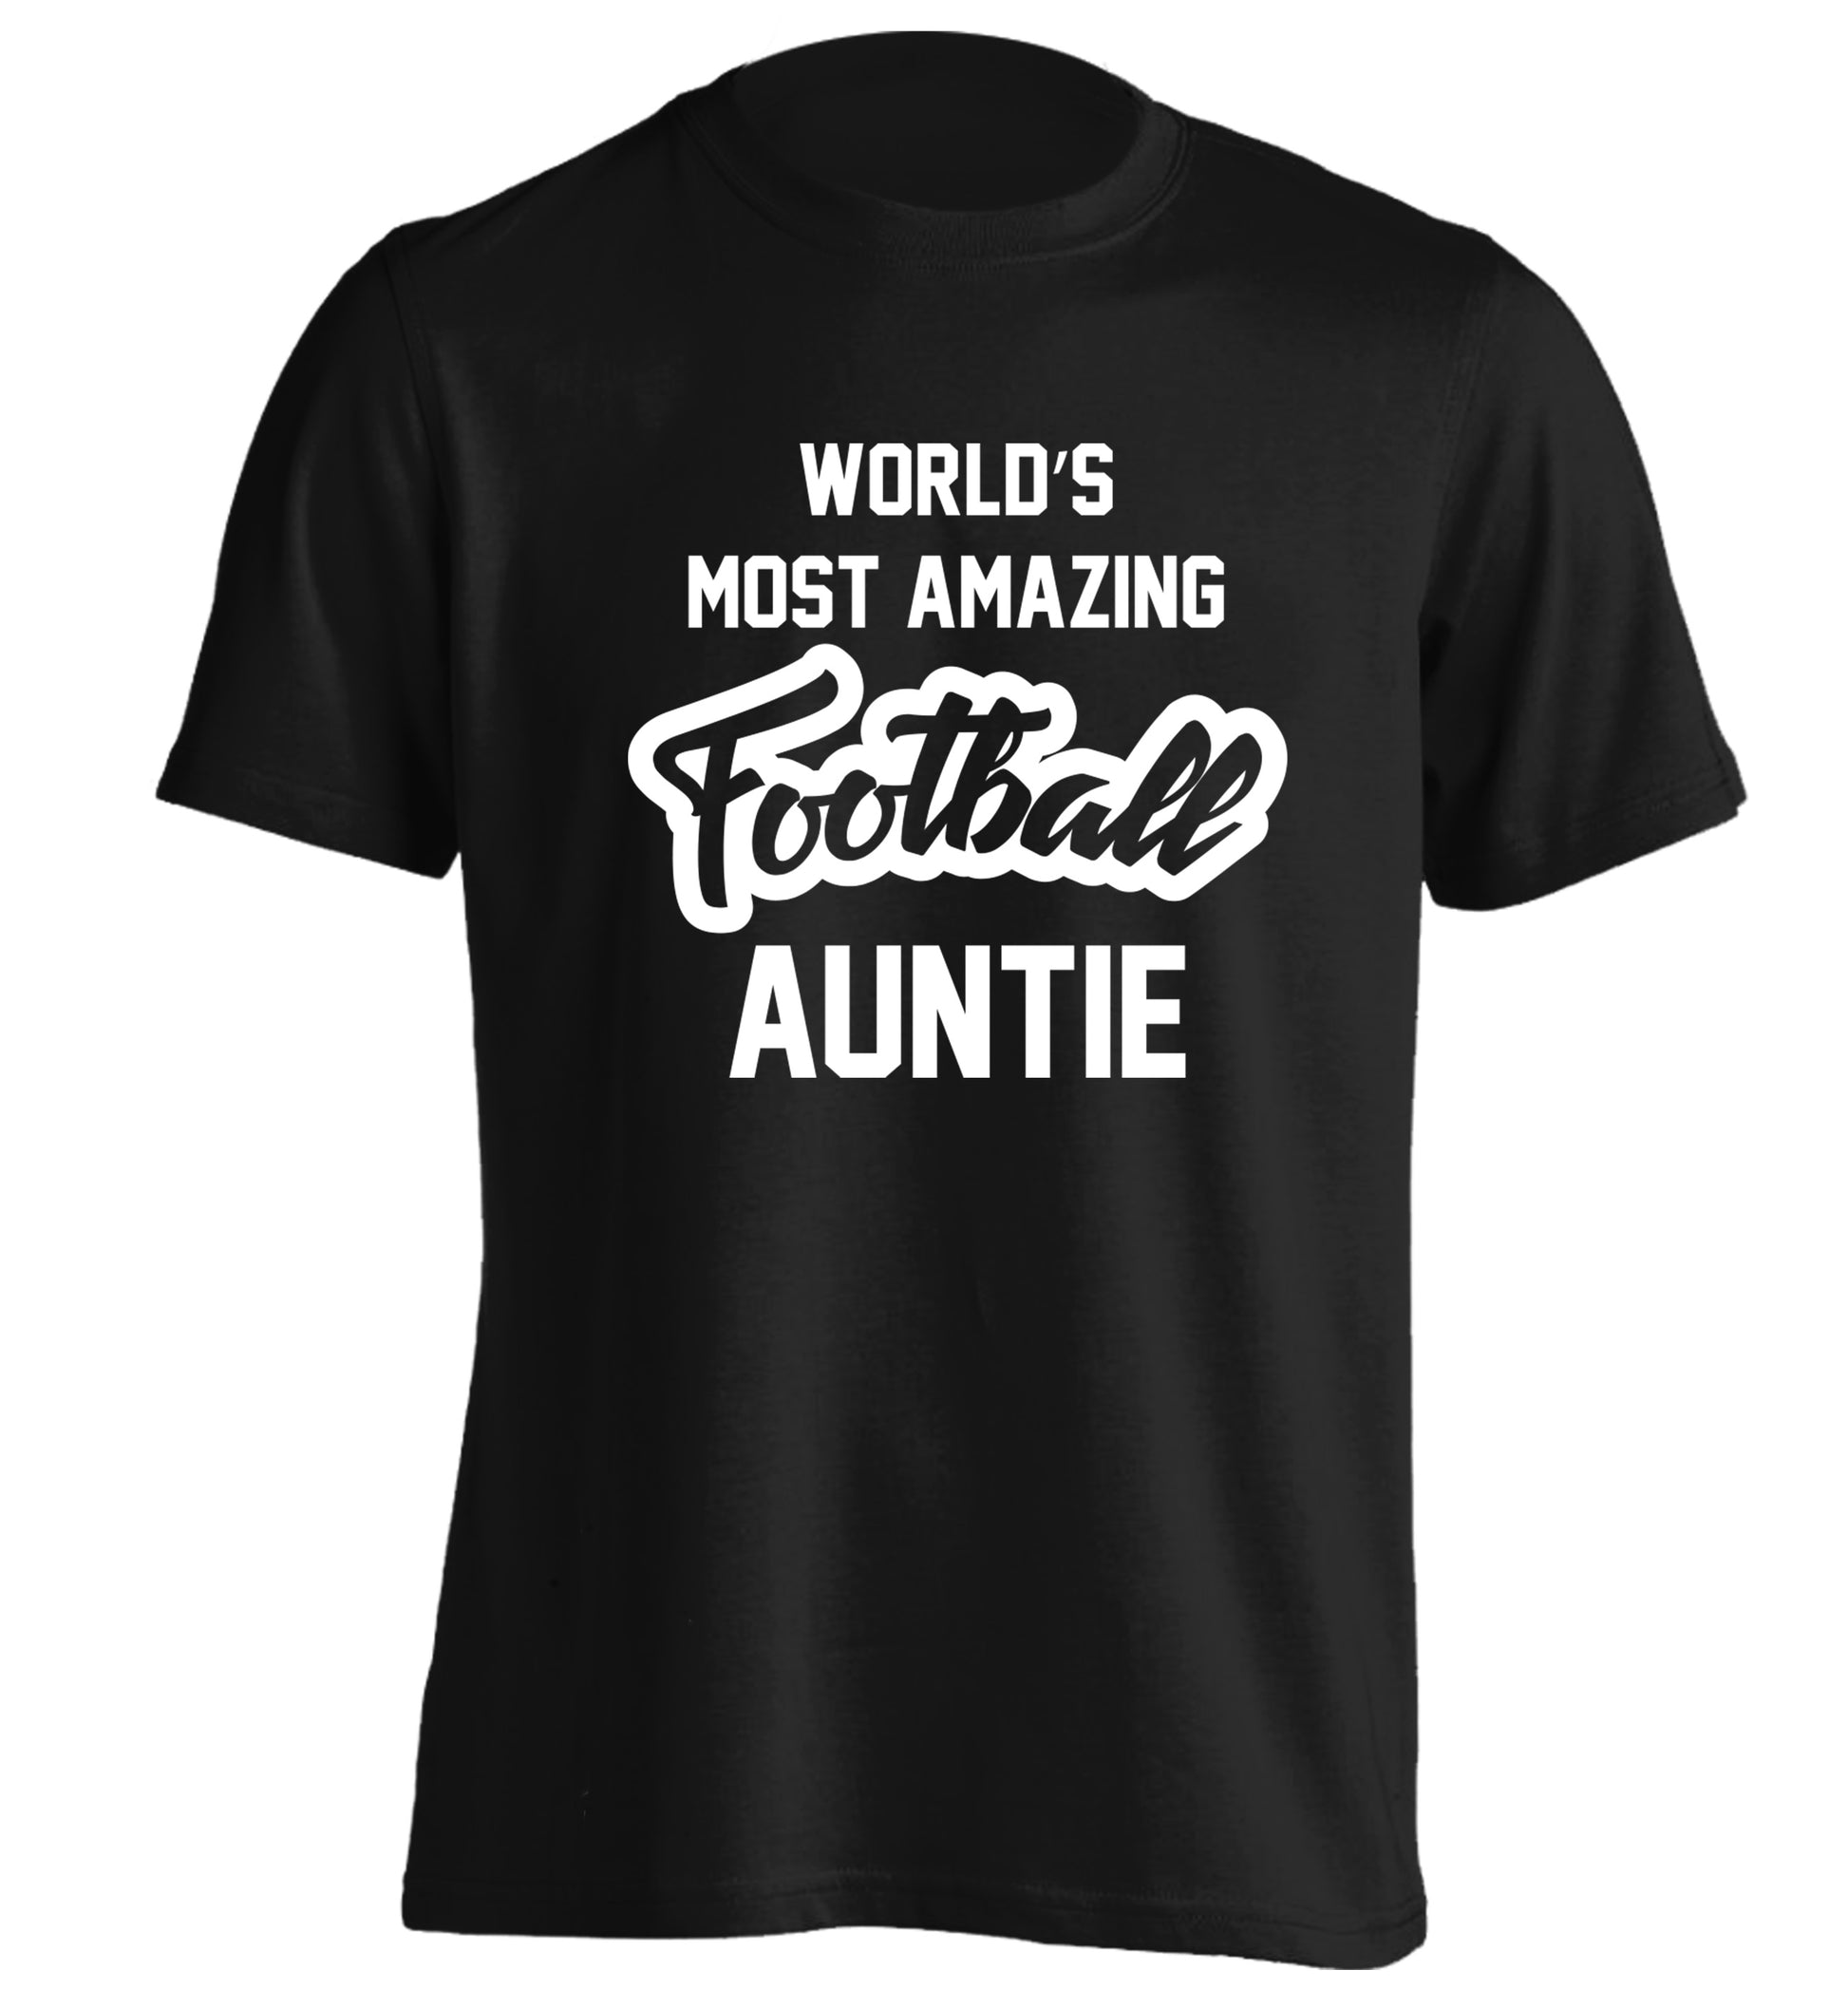 Worlds most amazing football auntie adults unisexblack Tshirt 2XL